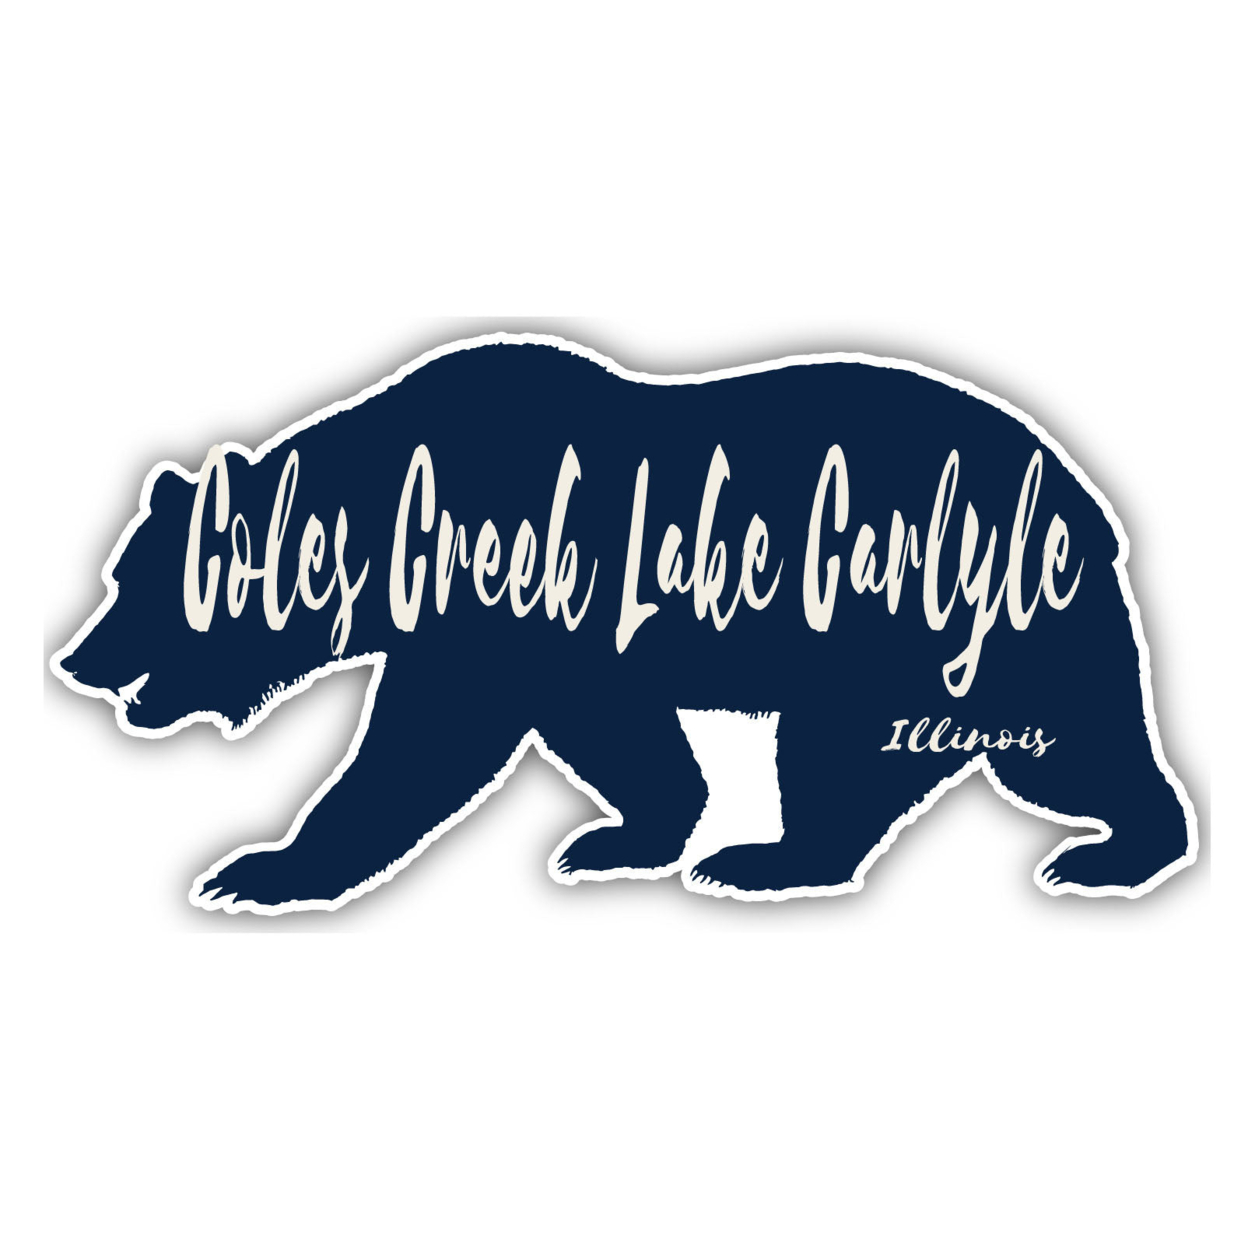 Coles Creek Lake Carlyle Illinois Souvenir Decorative Stickers (Choose Theme And Size) - Single Unit, 10-Inch, Bear